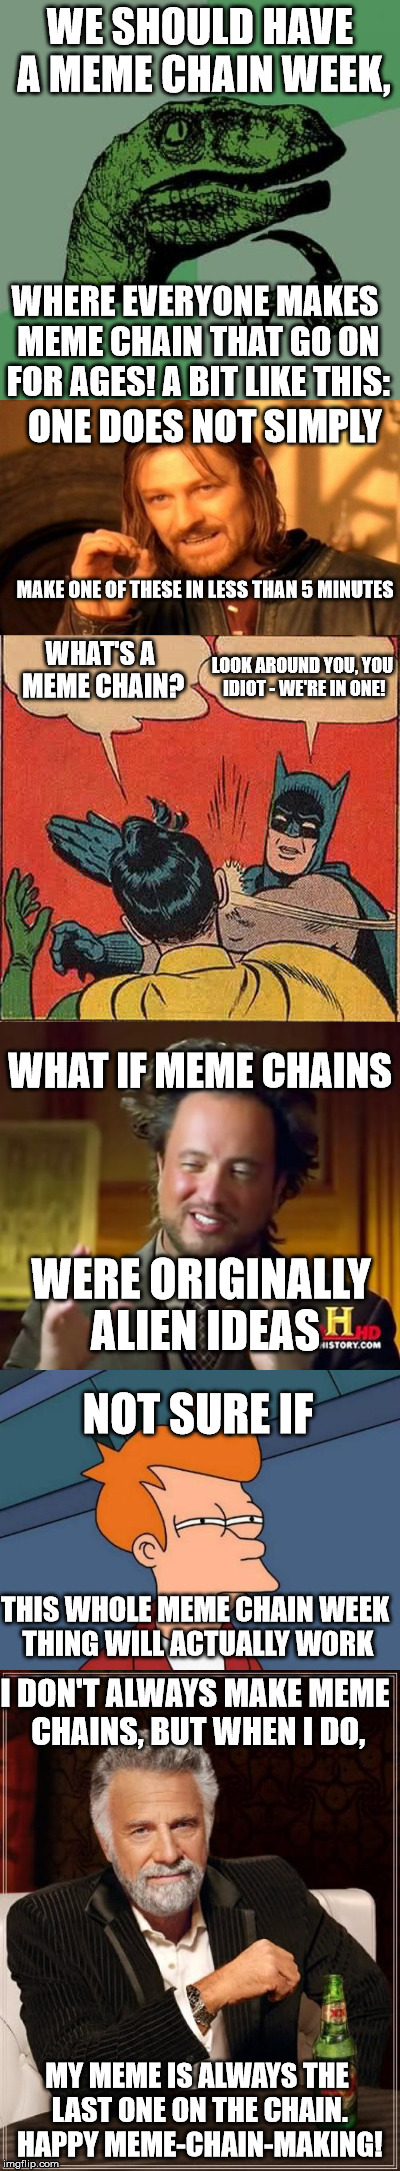 meme chains - meme chain week? - Imgflip